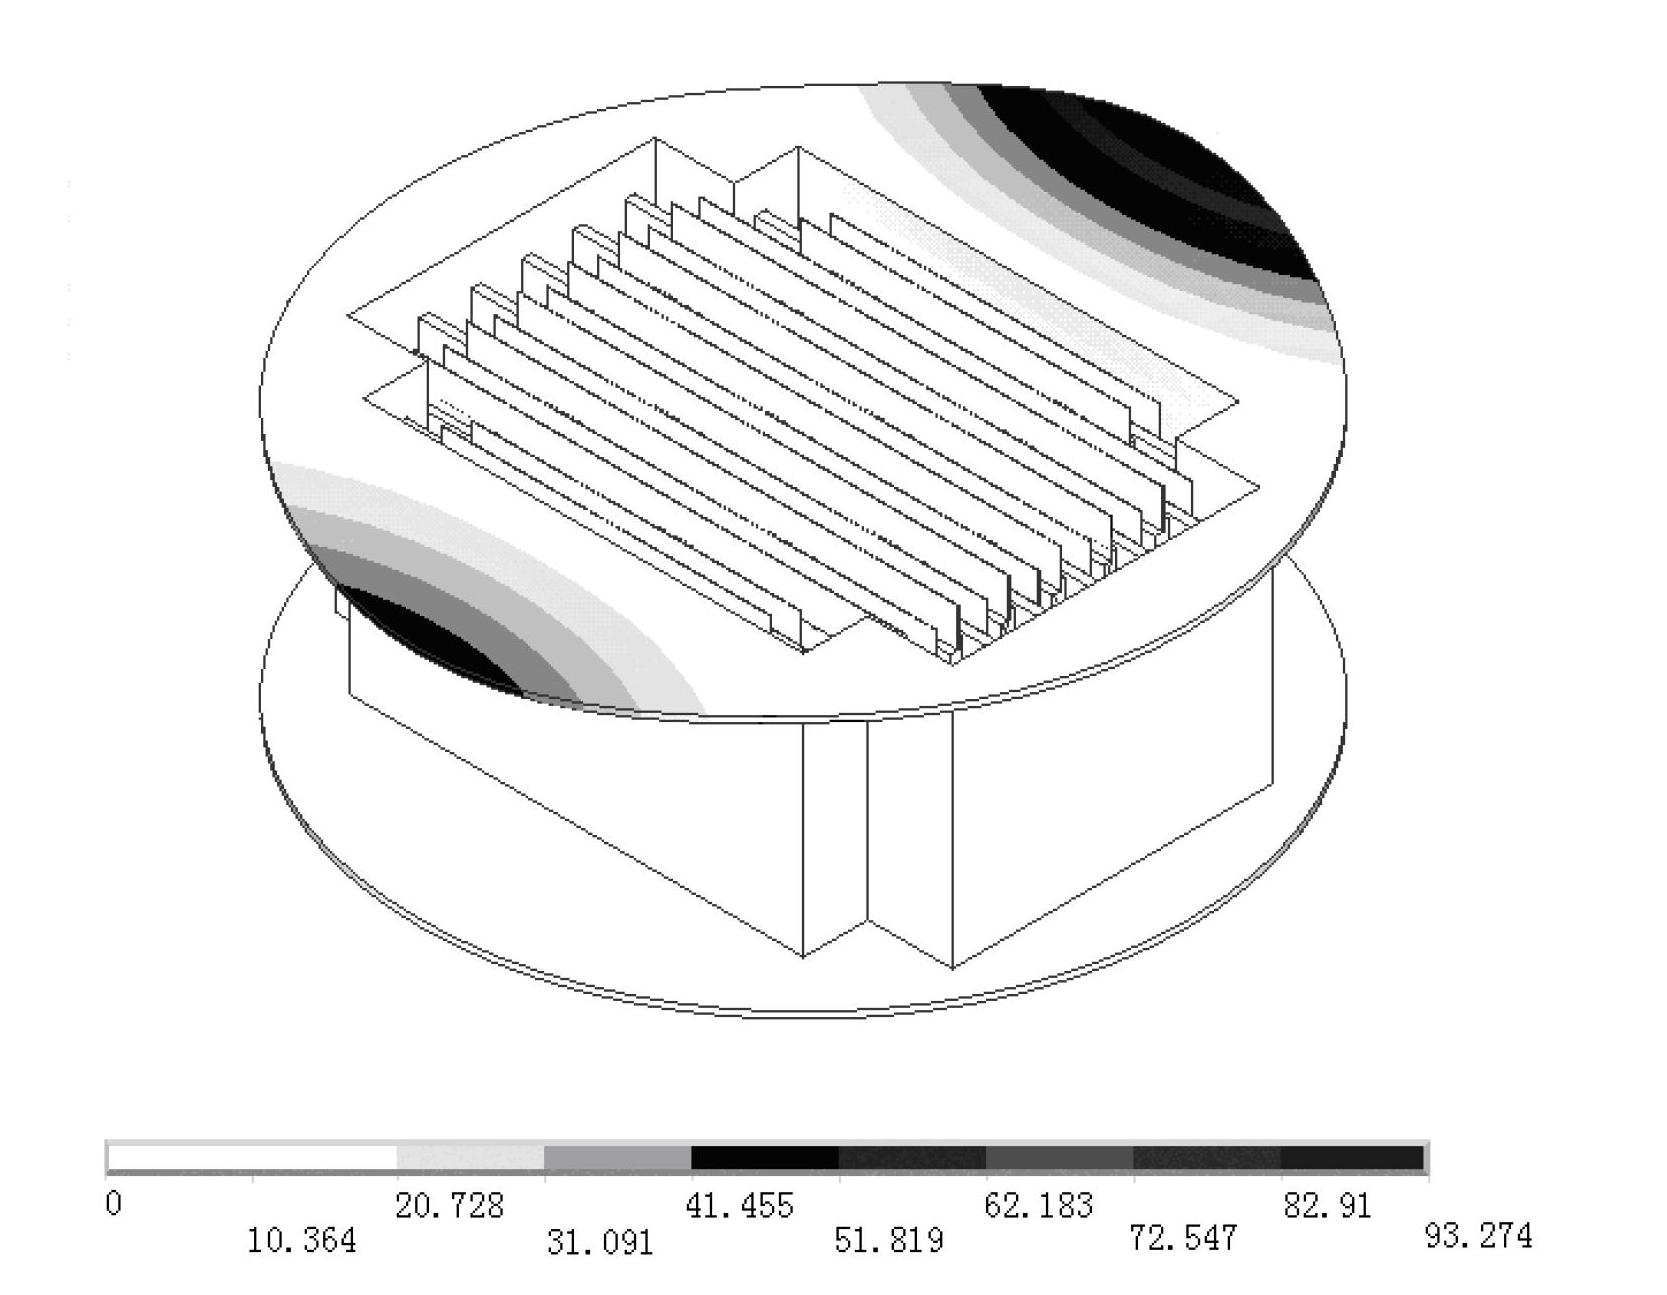 Modal analysis method based on finite element modeling of airborne active phased-array antenna